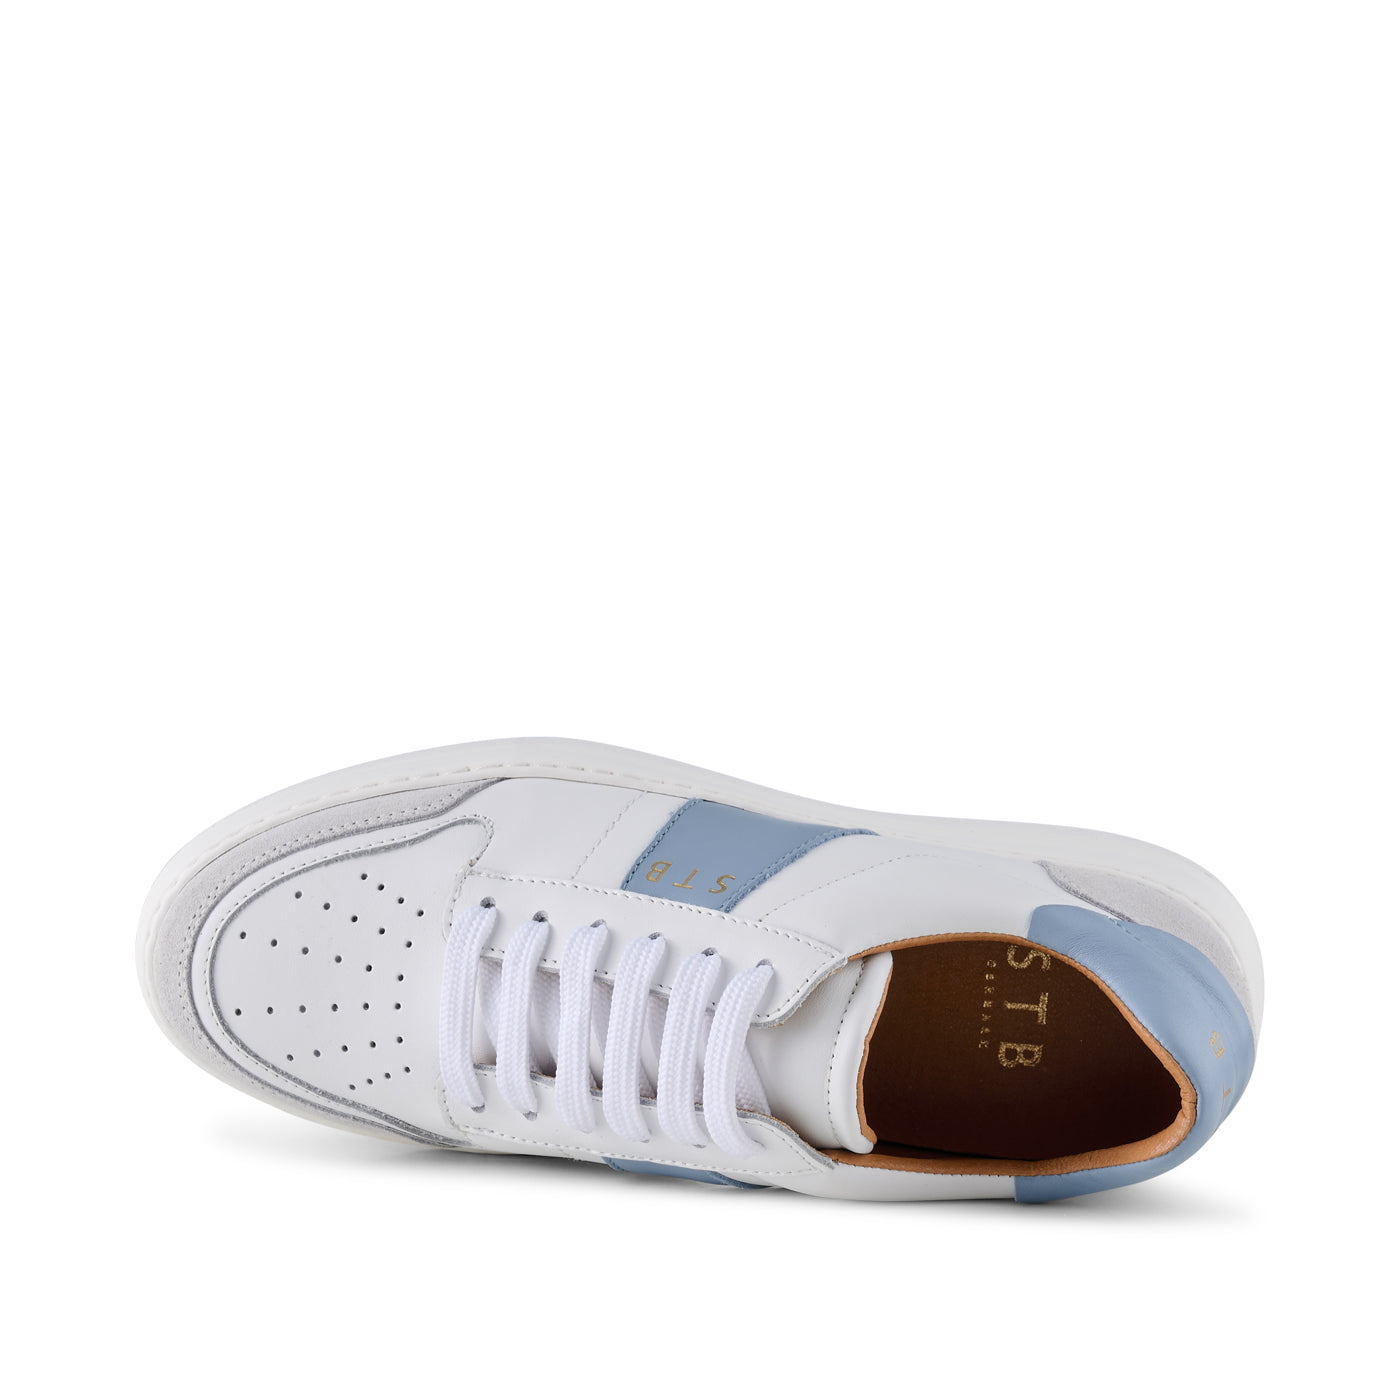 SHOE THE BEAR WOMENS Vinca sneaker leather Sneakers 836 WHITE/BLUE